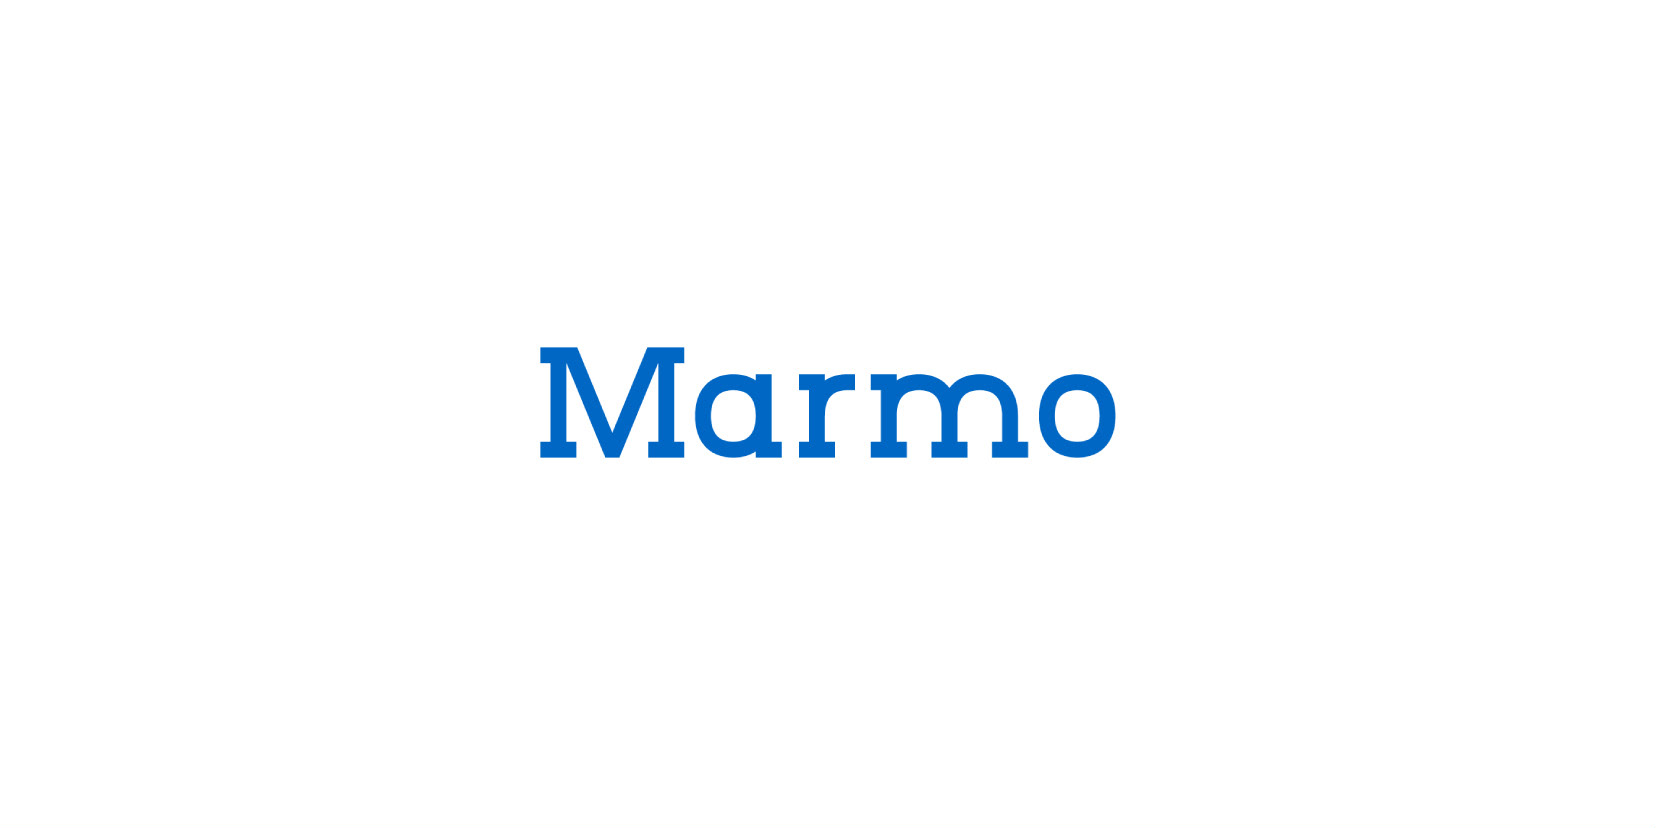 Marmo Free Font Family - serif